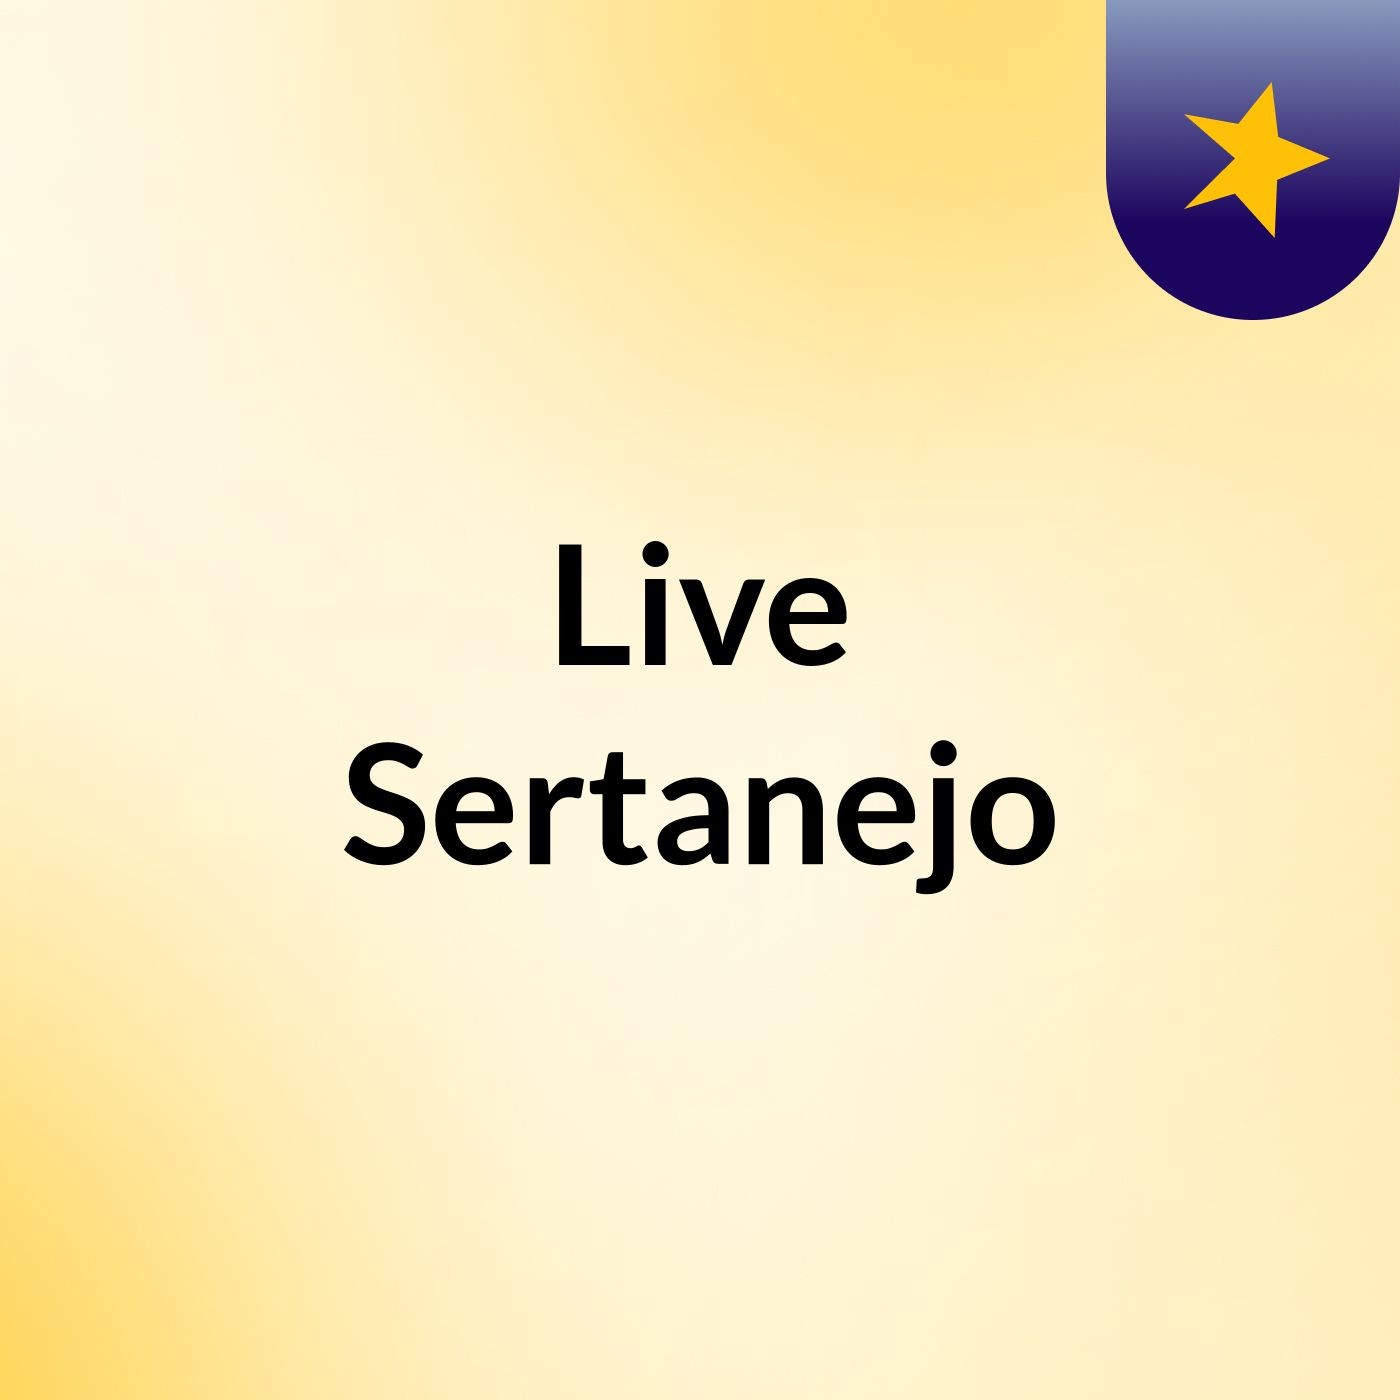 Live Sertanejo